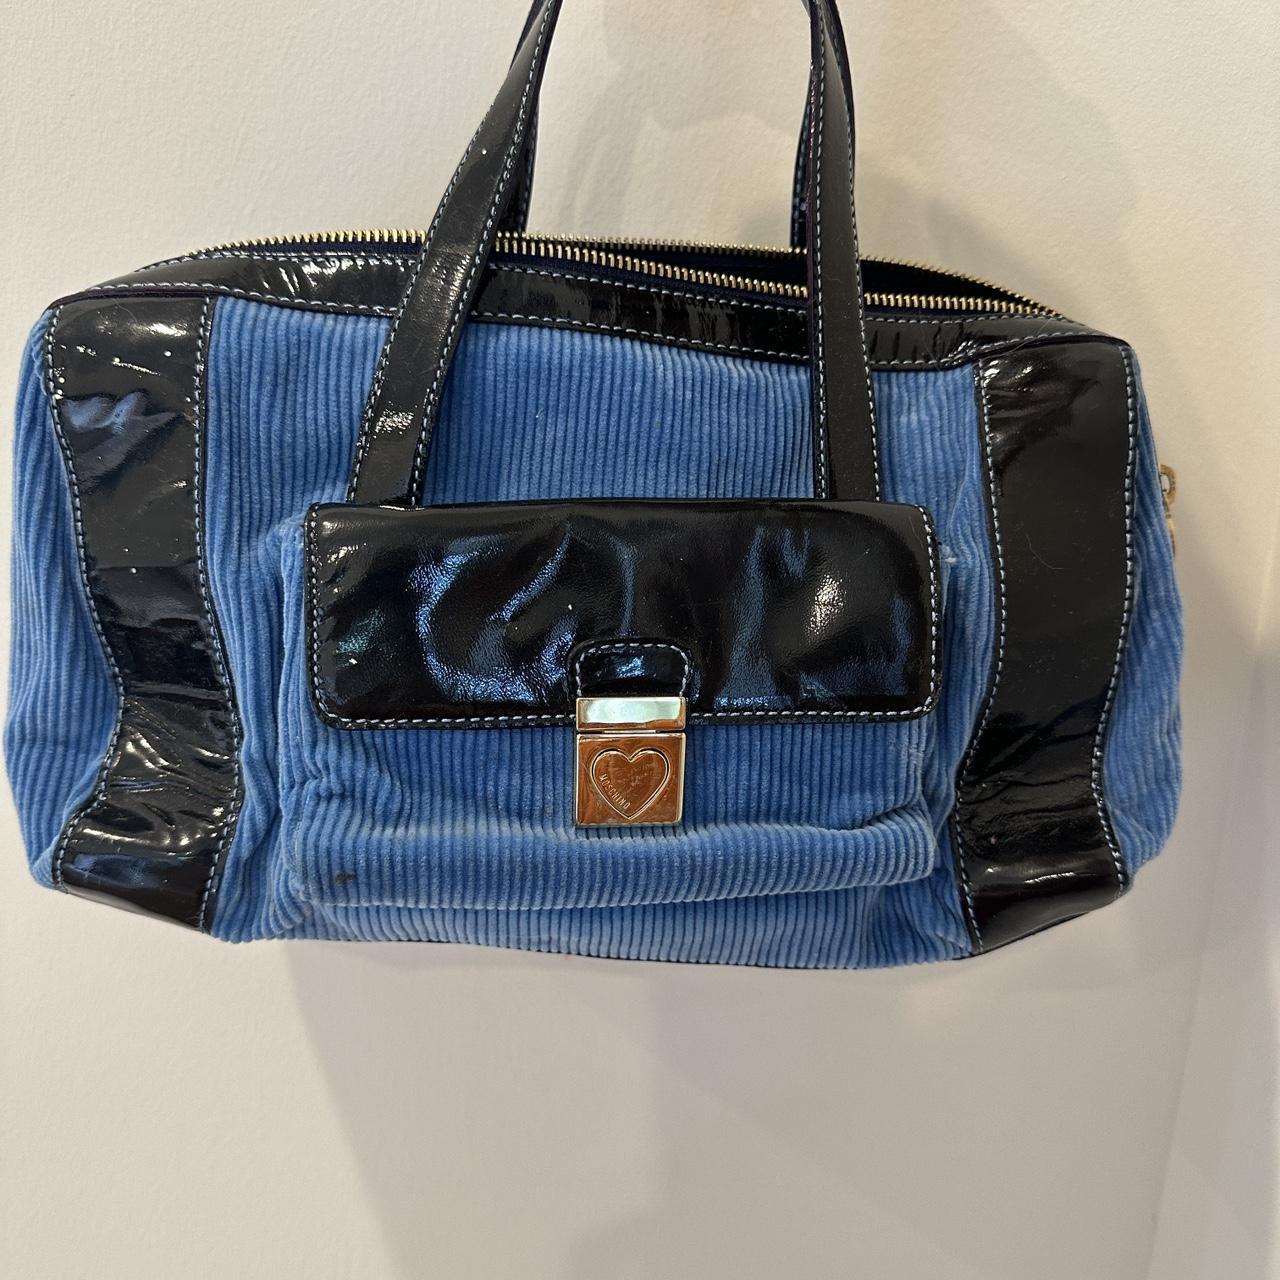 Moschino Cheap & Chic Women's Blue and Black Bag (2)